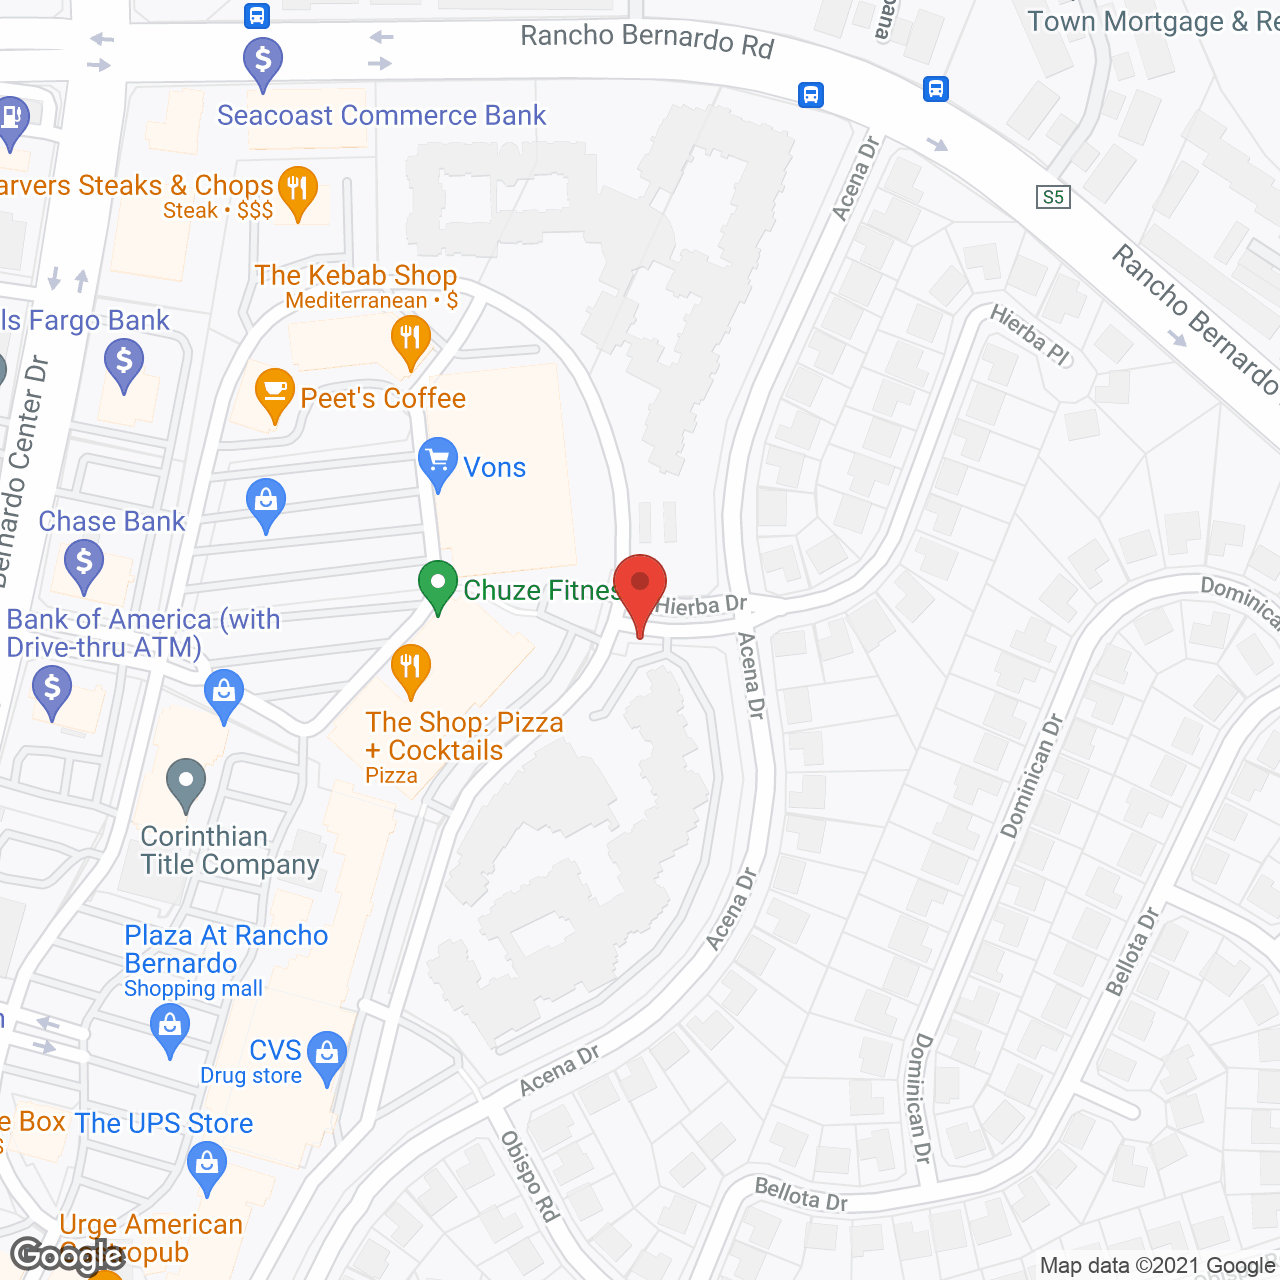 Remington Club in google map